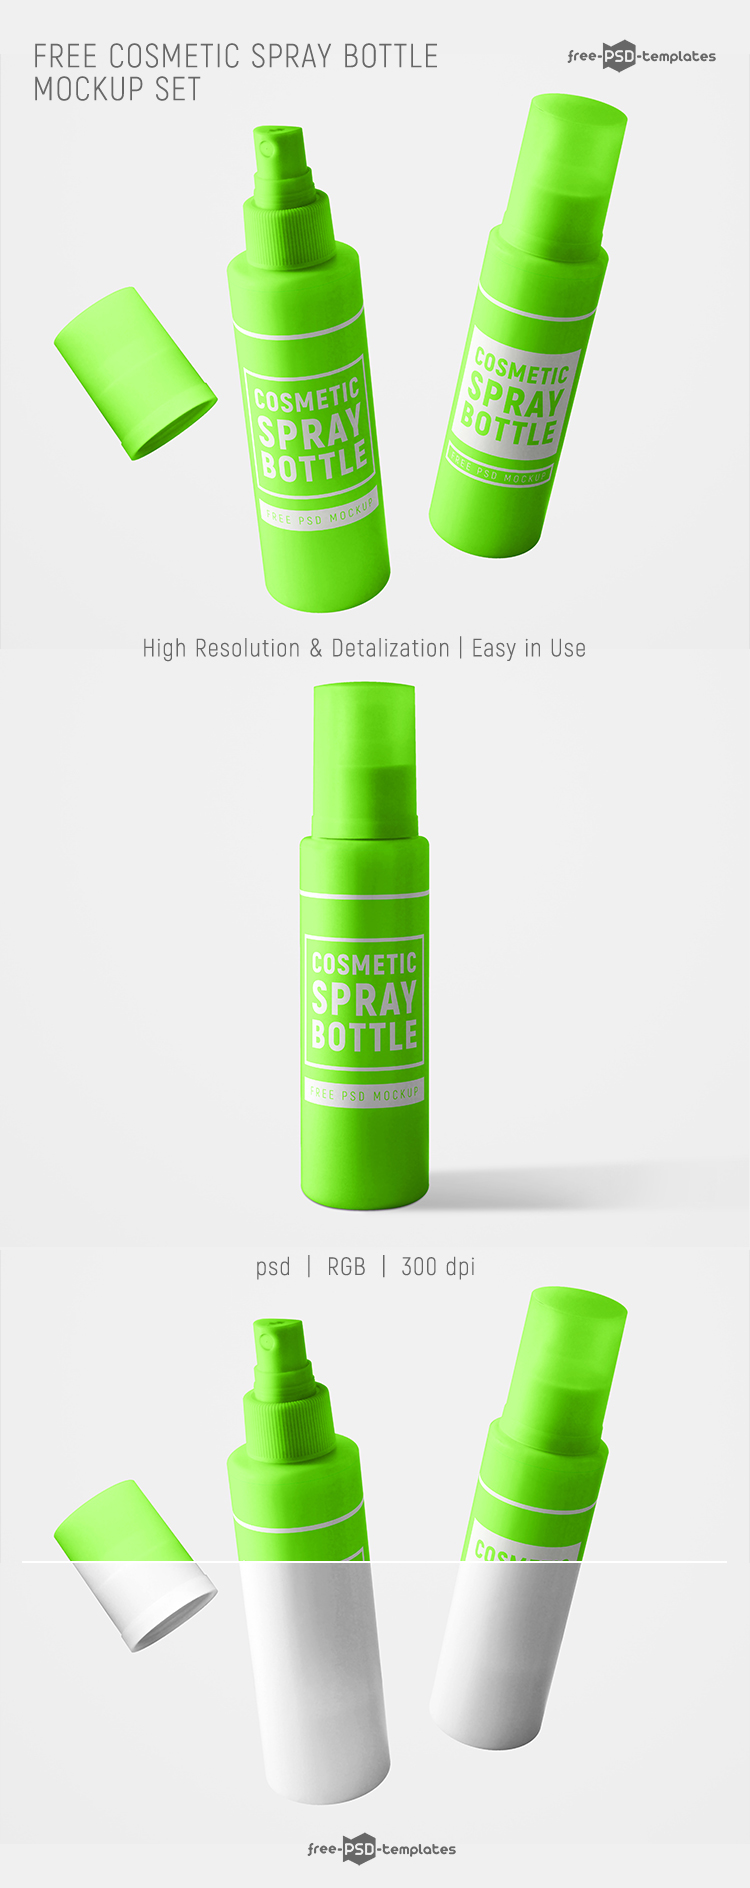 Download Free Cosmetic Spray Bottle Mockup Set | Free PSD Templates Free Mockups